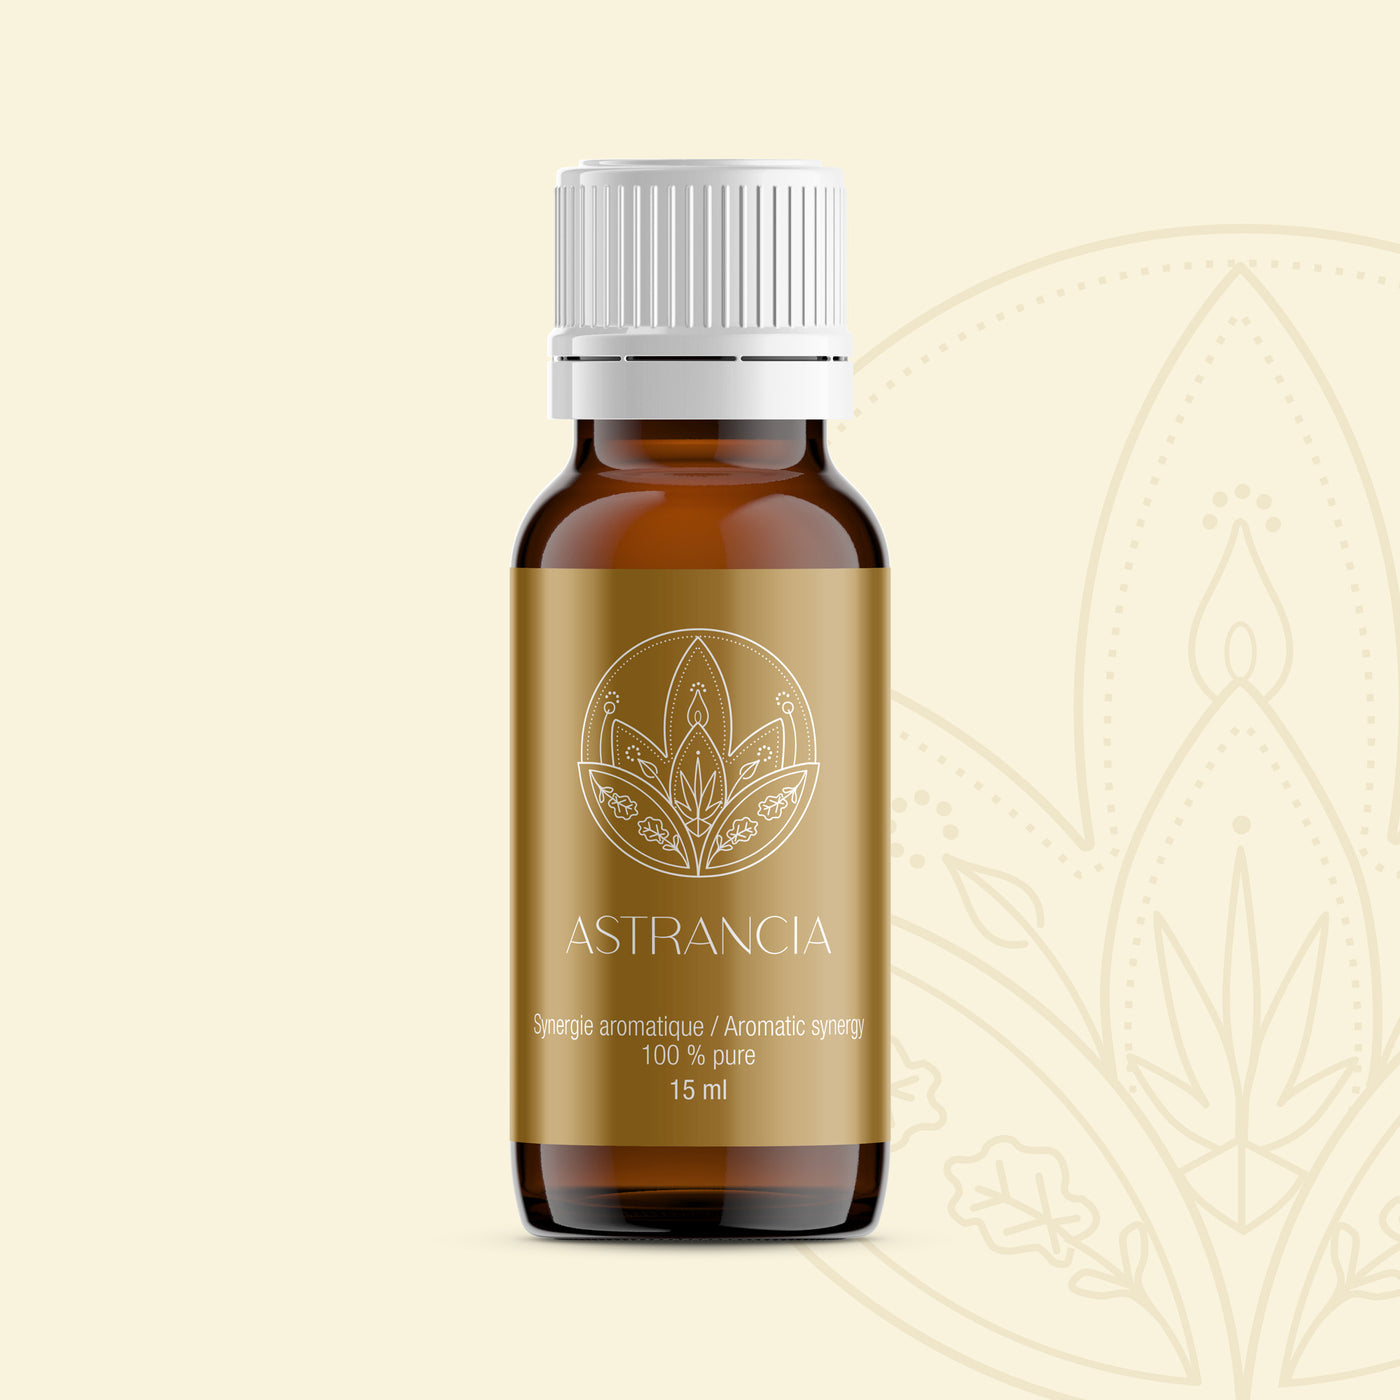 Astrancia - Synergie aromatique 100% pure